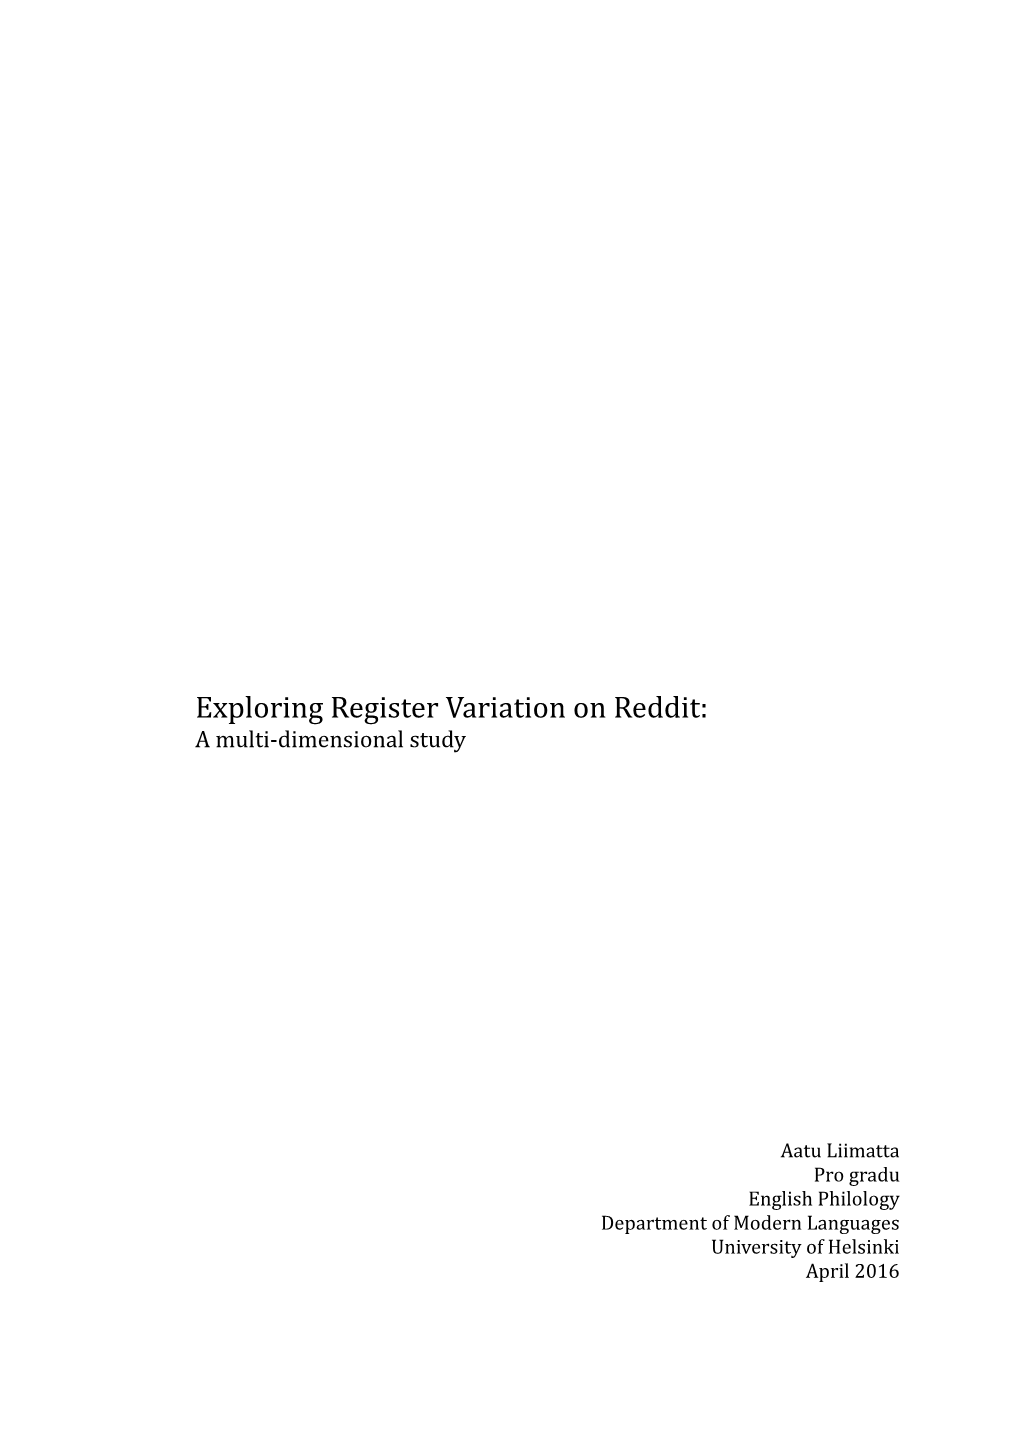 Exploring Register Variation on Reddit: a Multi-Dimensional Study